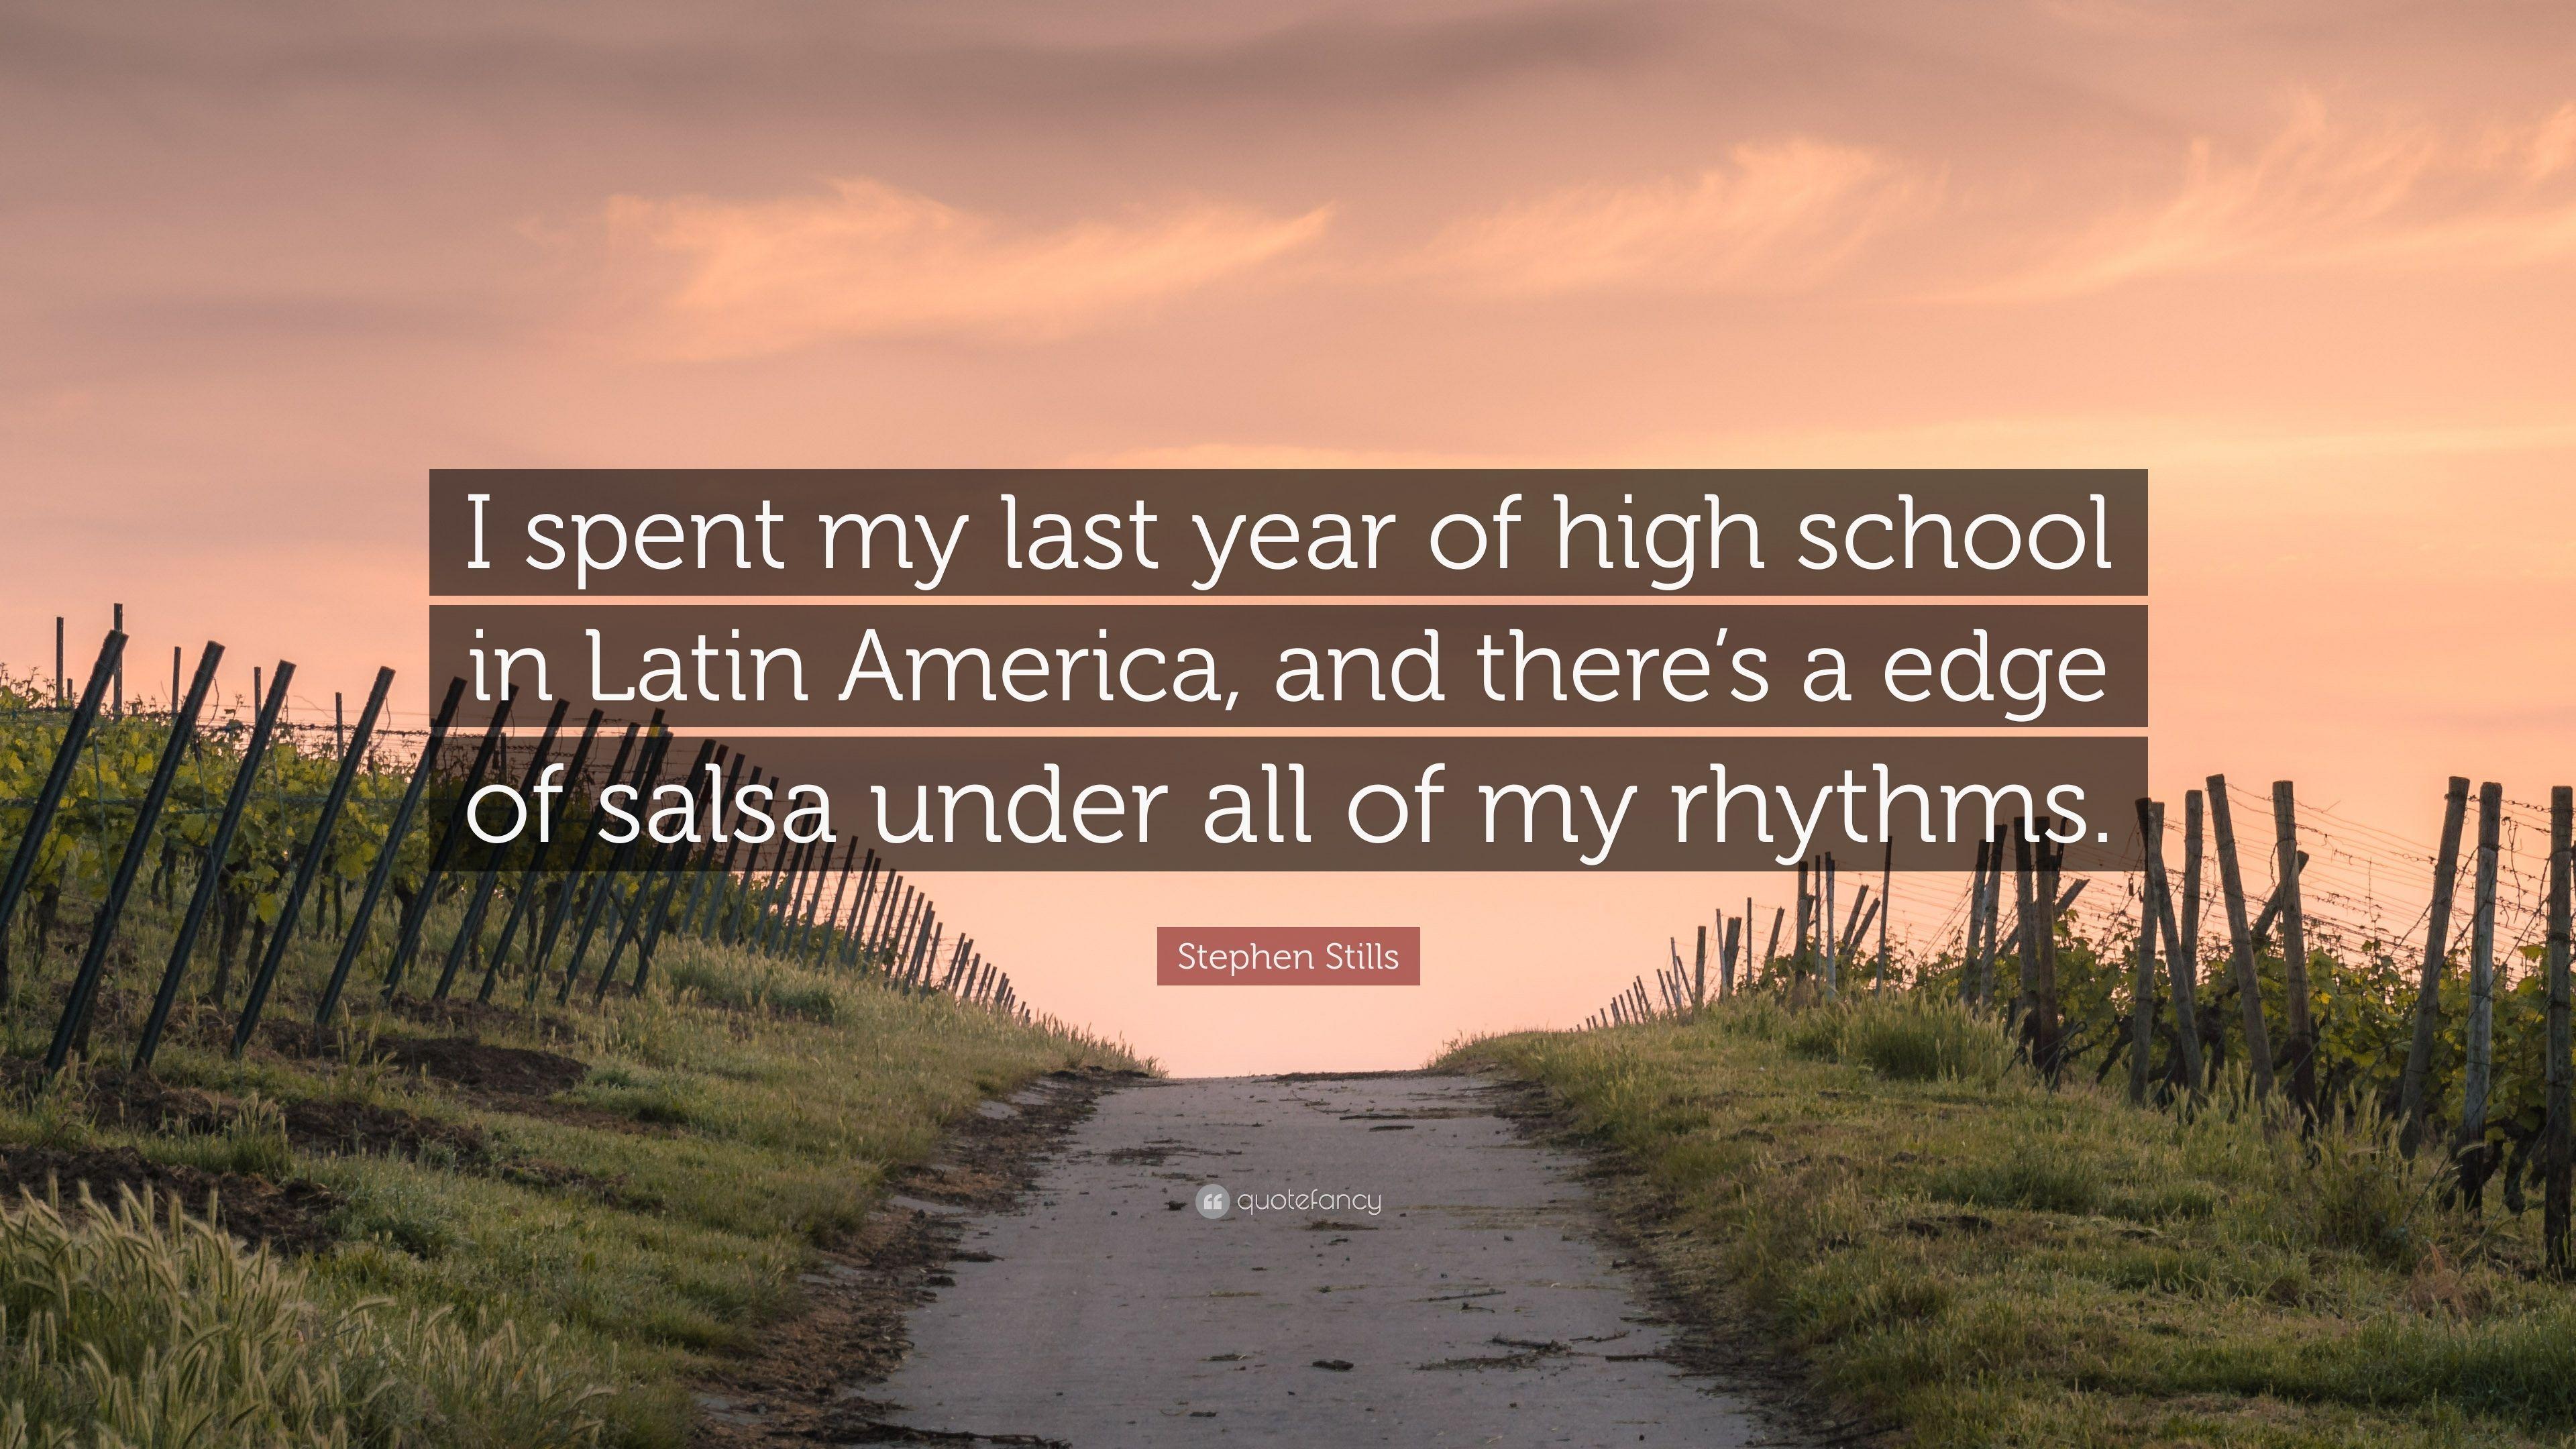 Stephen Stills Quote: “I spent my last year of high school in Latin